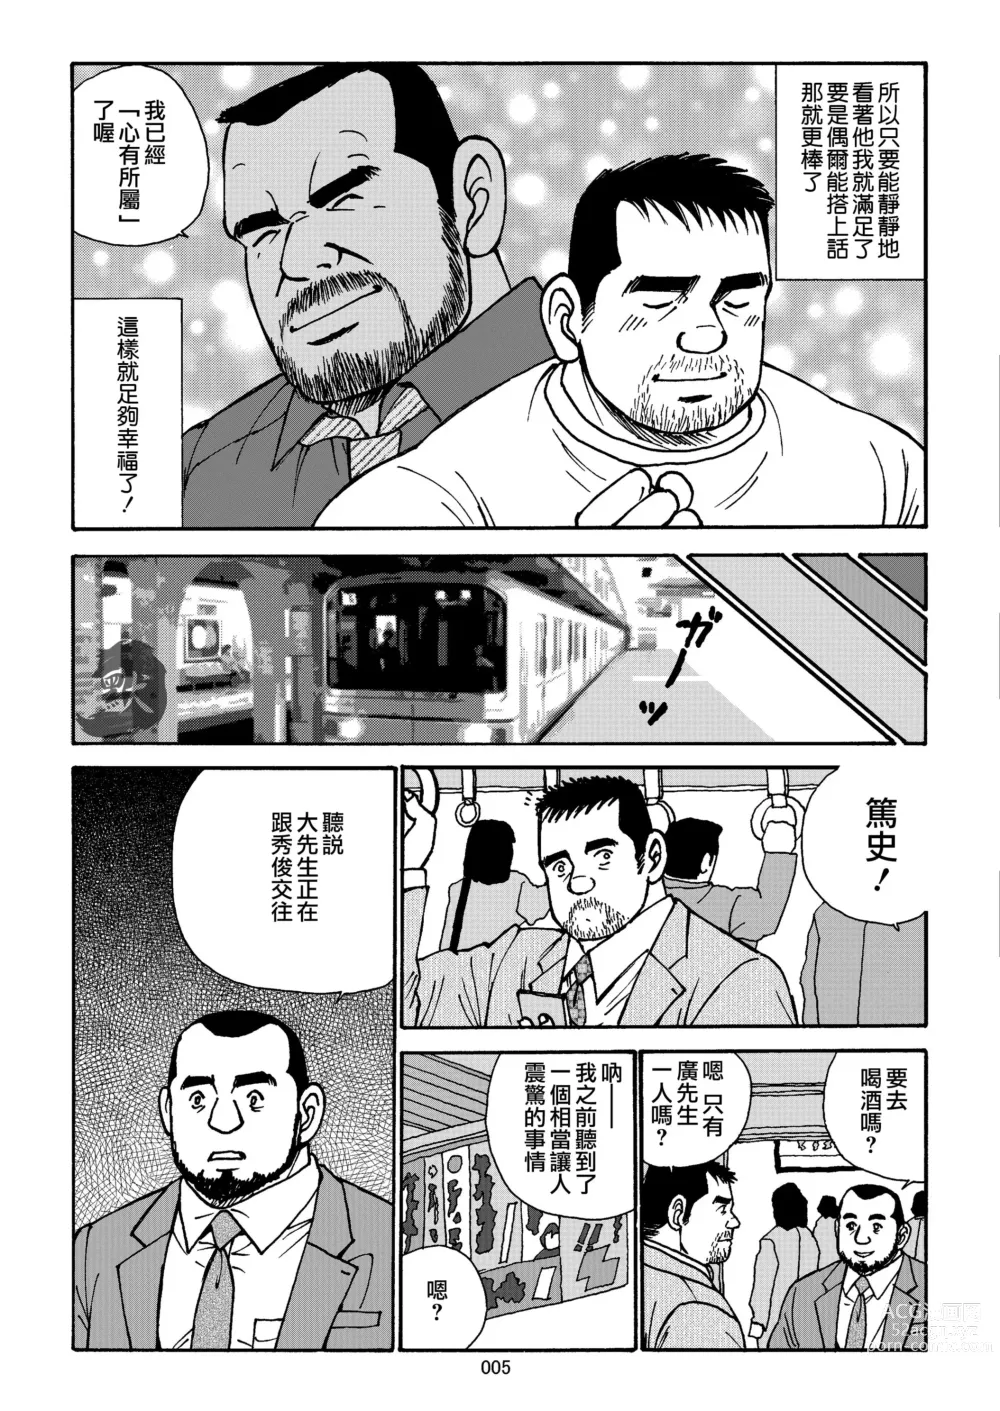 Page 5 of manga おいしい性活